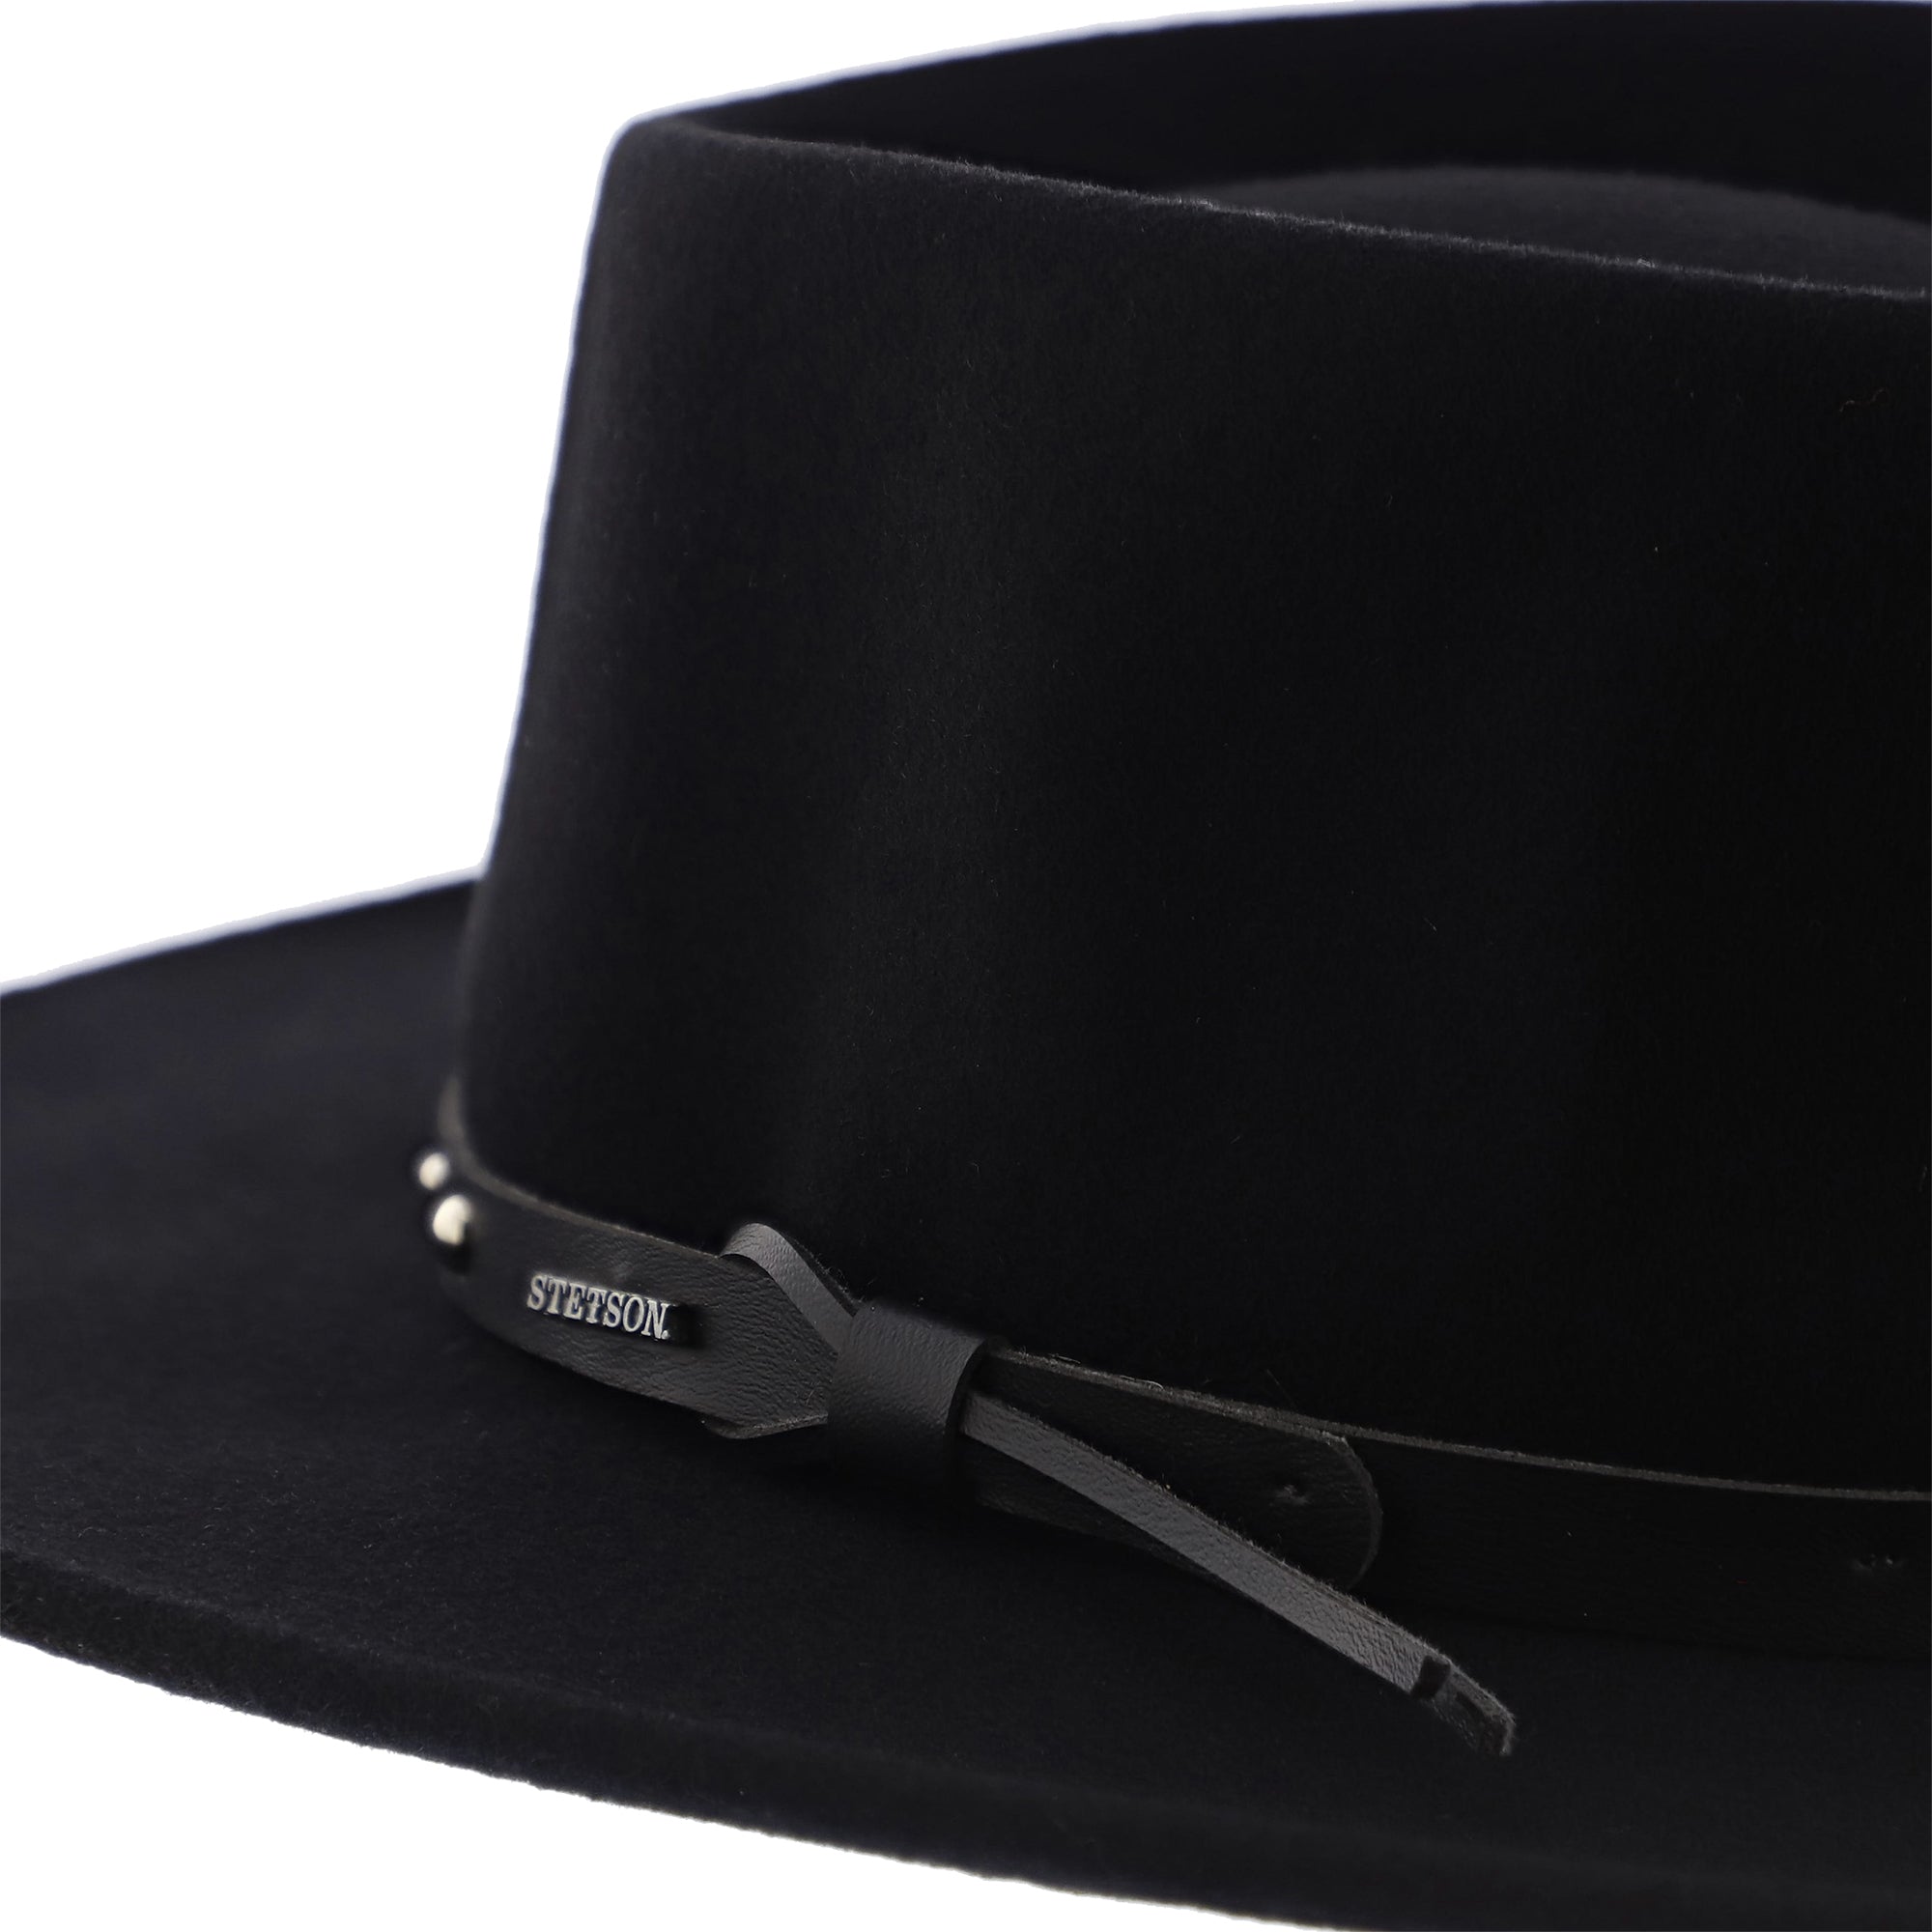 Stetson Men's Black Hawk Crushable Wool Felt Gambler Hat - Country Outfitter